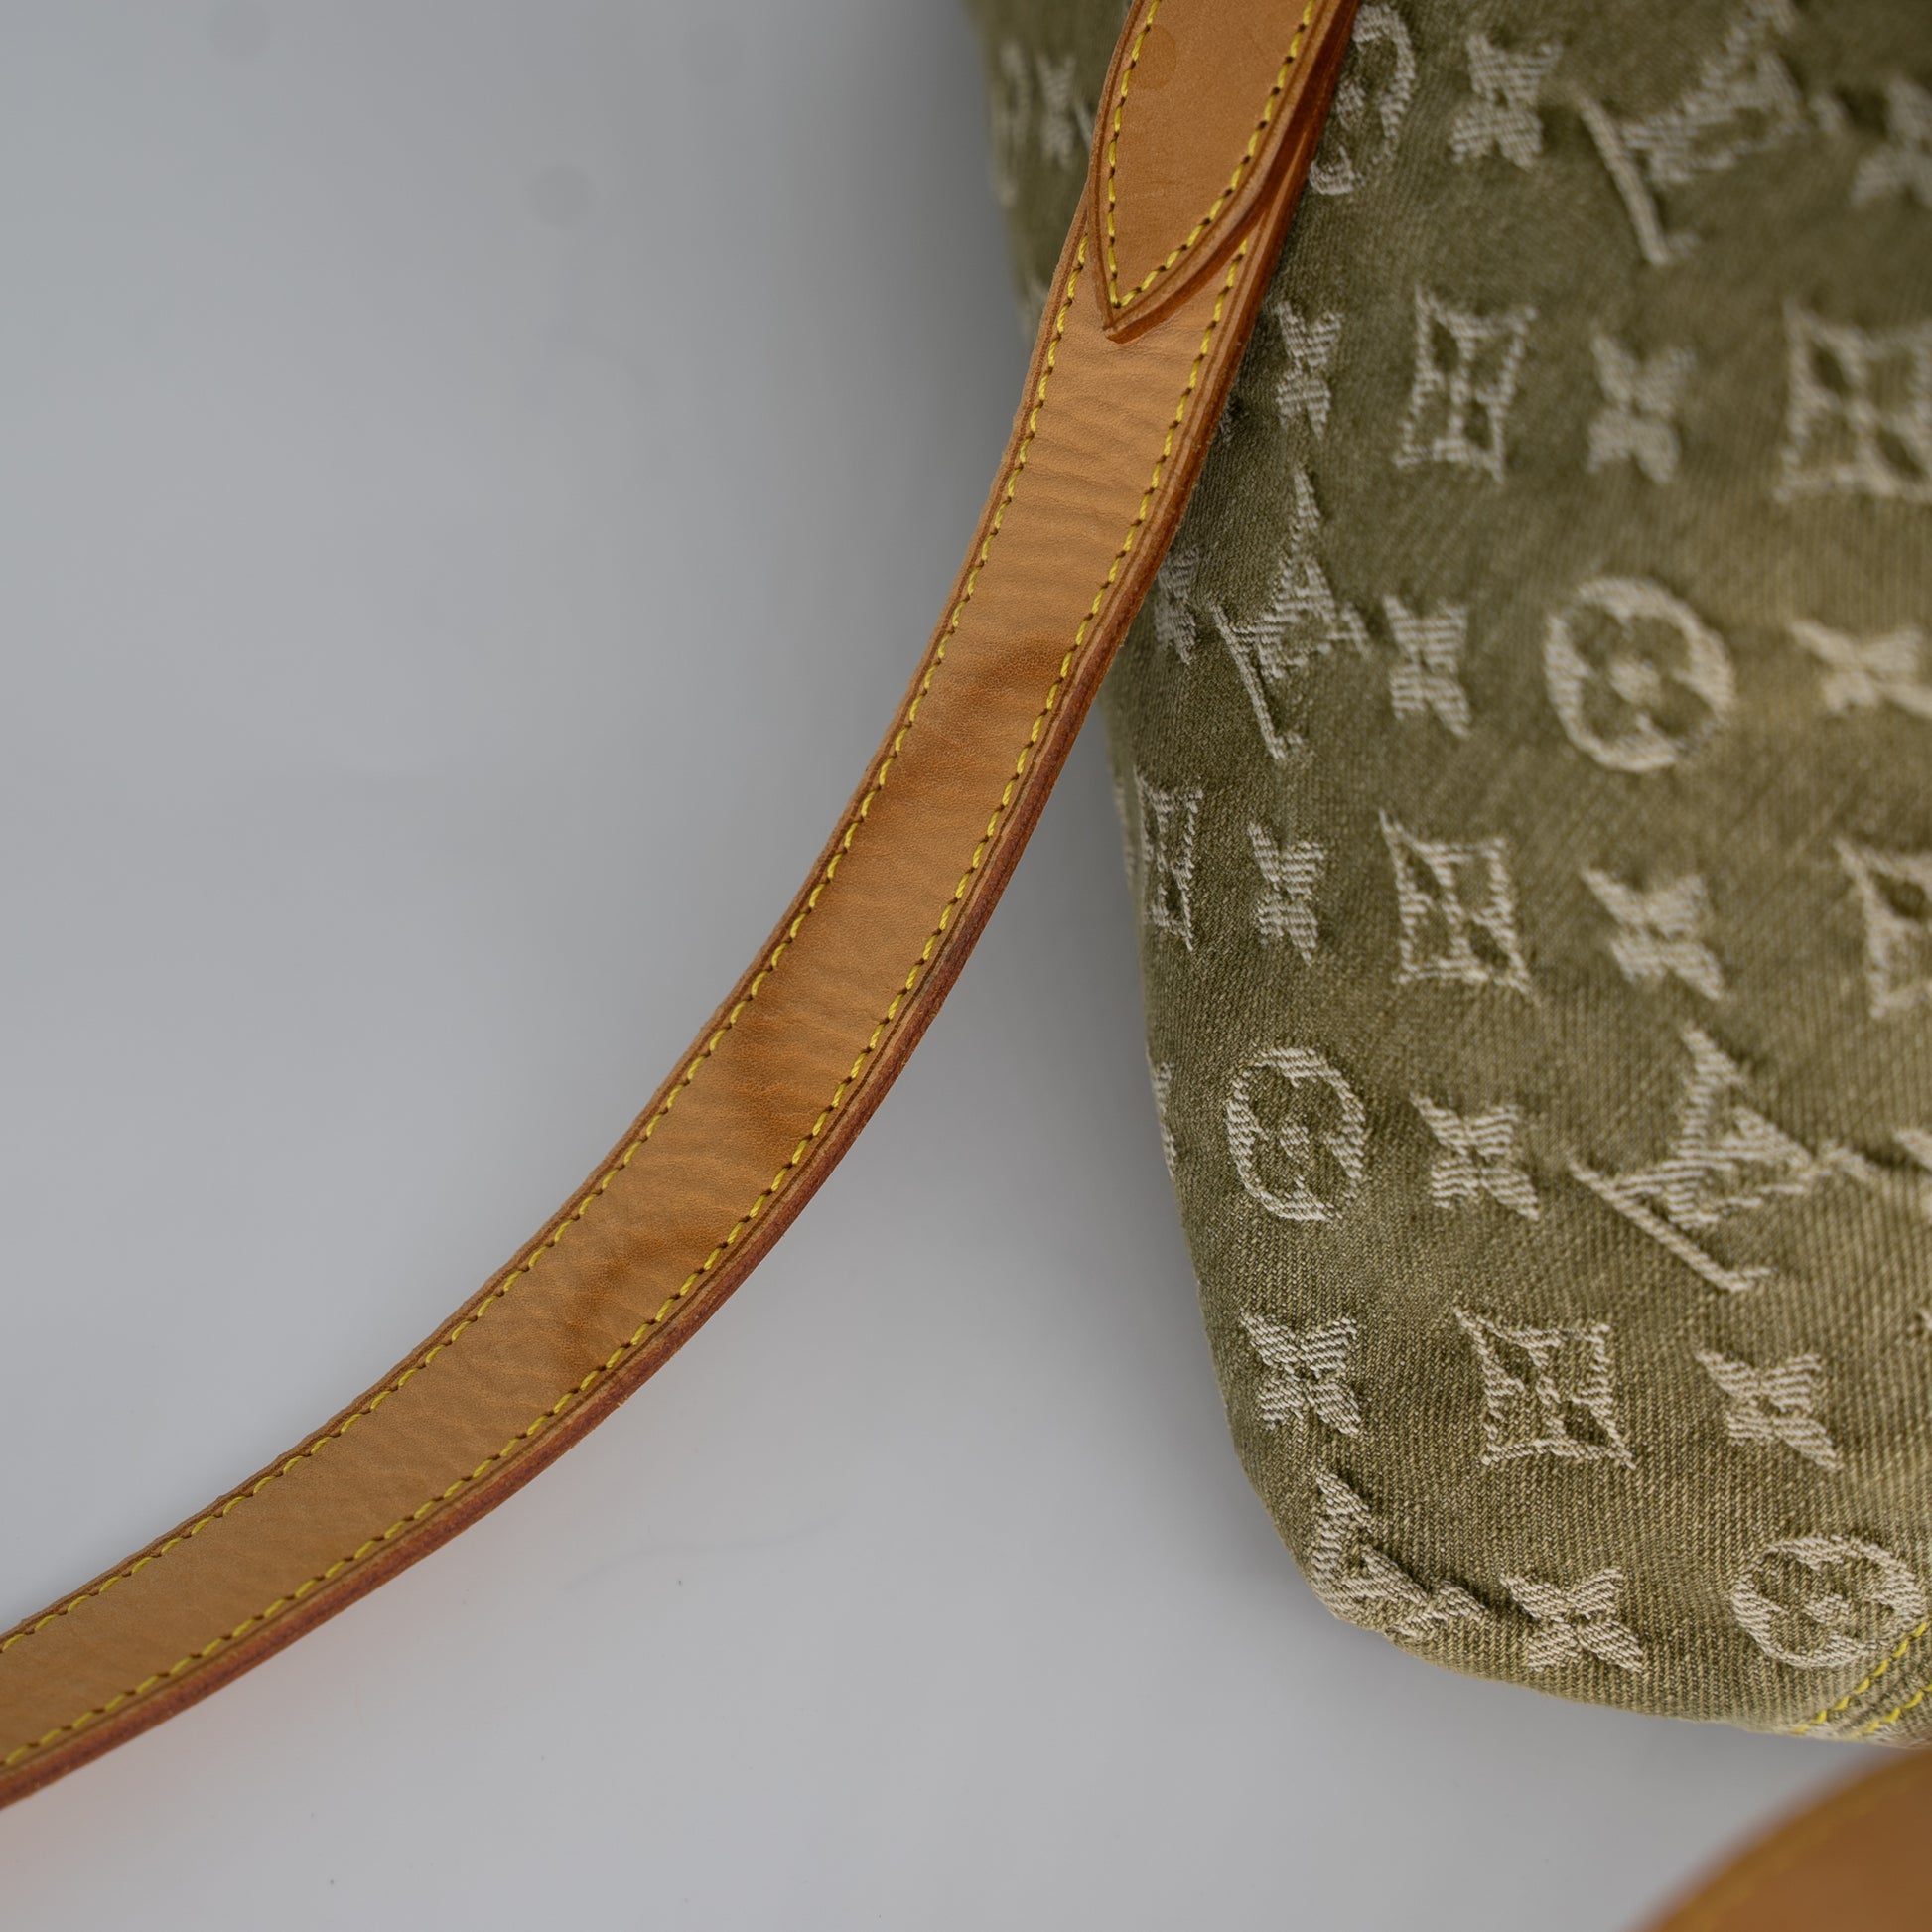 LOUIS VUITTON Green Denim LV Monogram Logo Baggy Top Handle Shoulder Bag